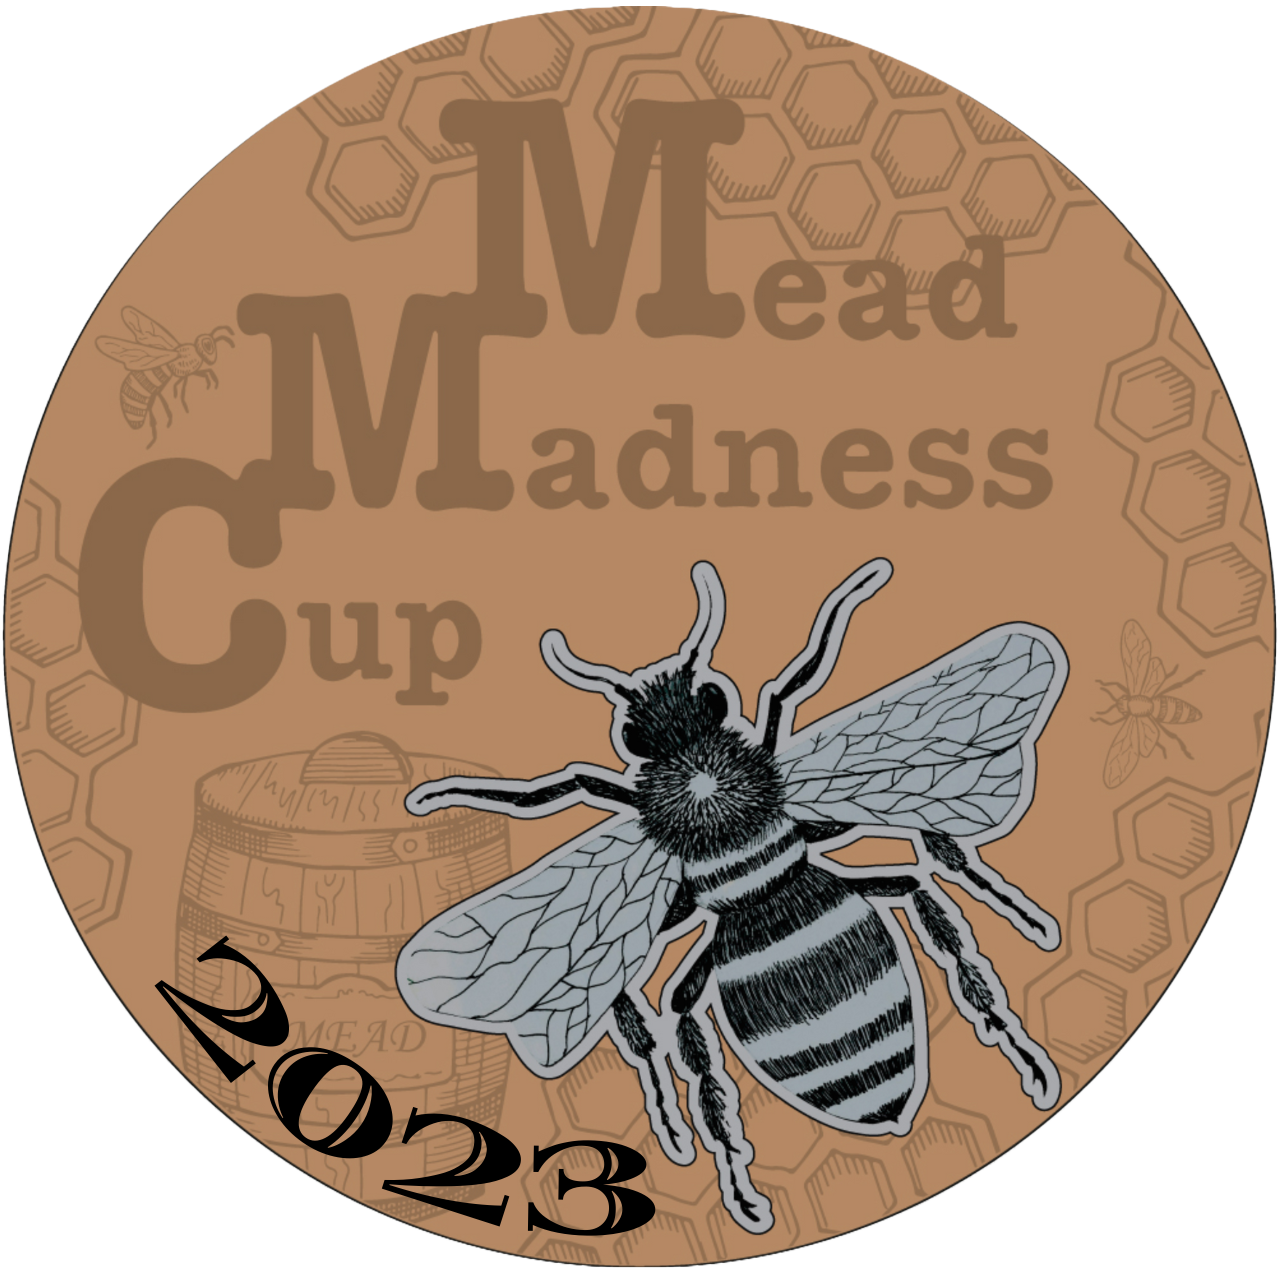 Bronzemedallie beim Mead Madness Cup